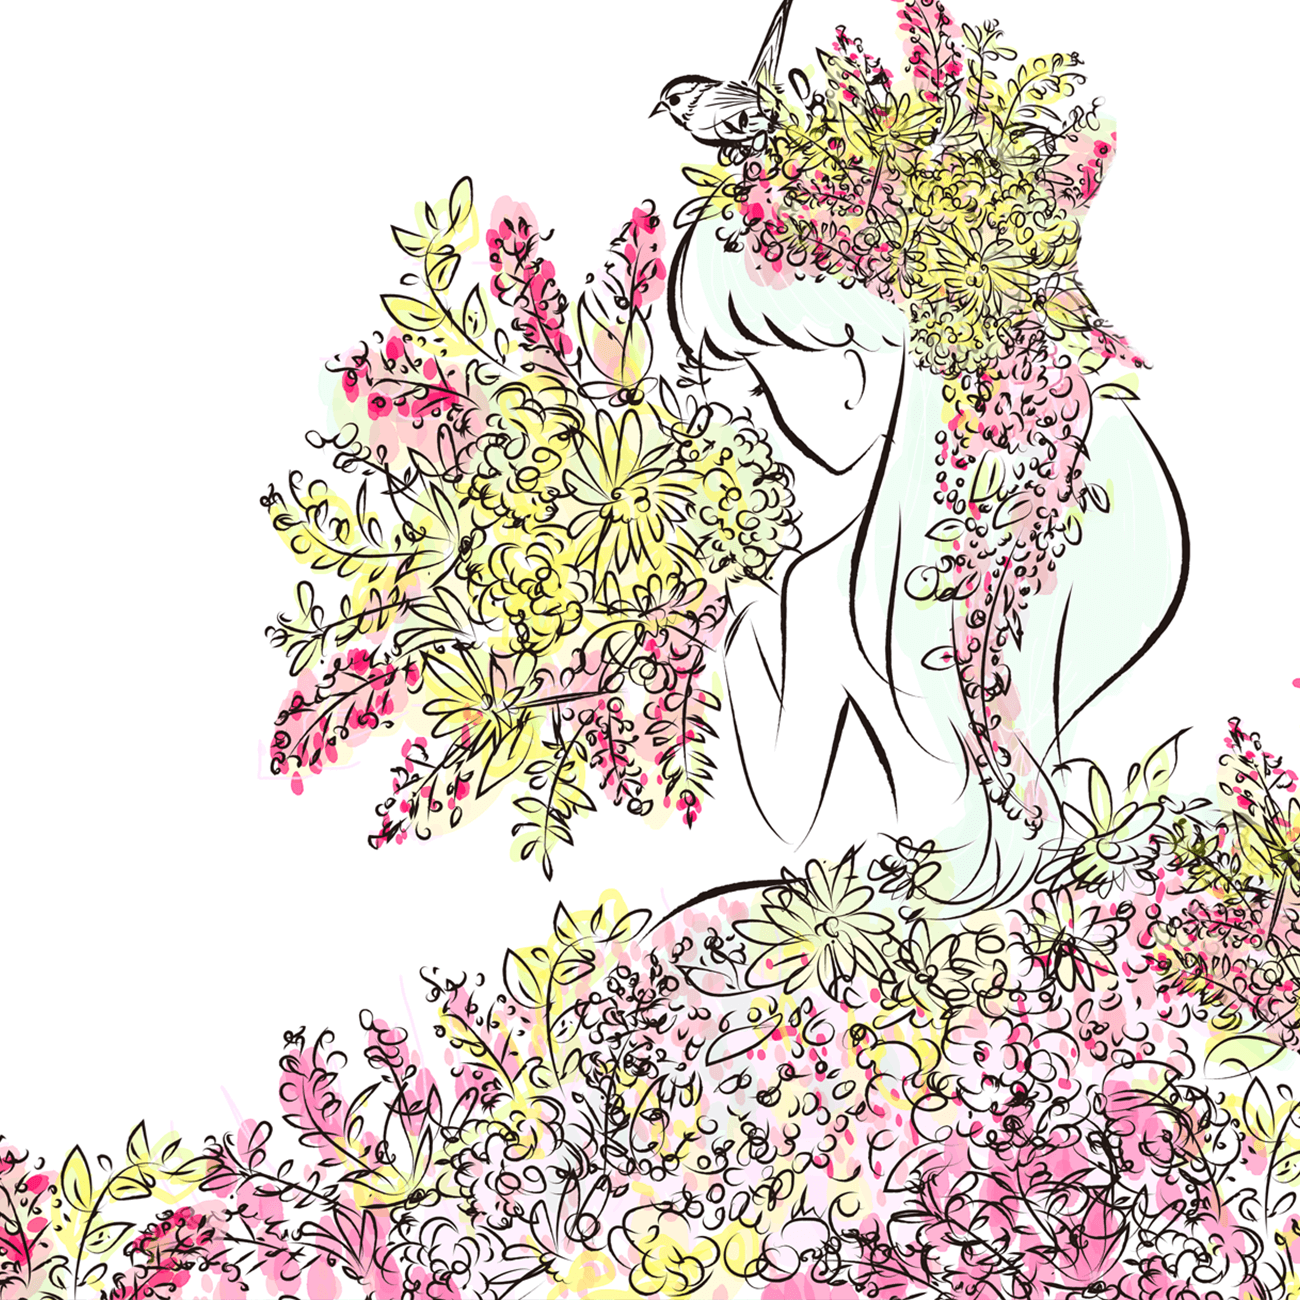 Girl of the watercolor -summer flowers-水彩女子 夏の花の女子